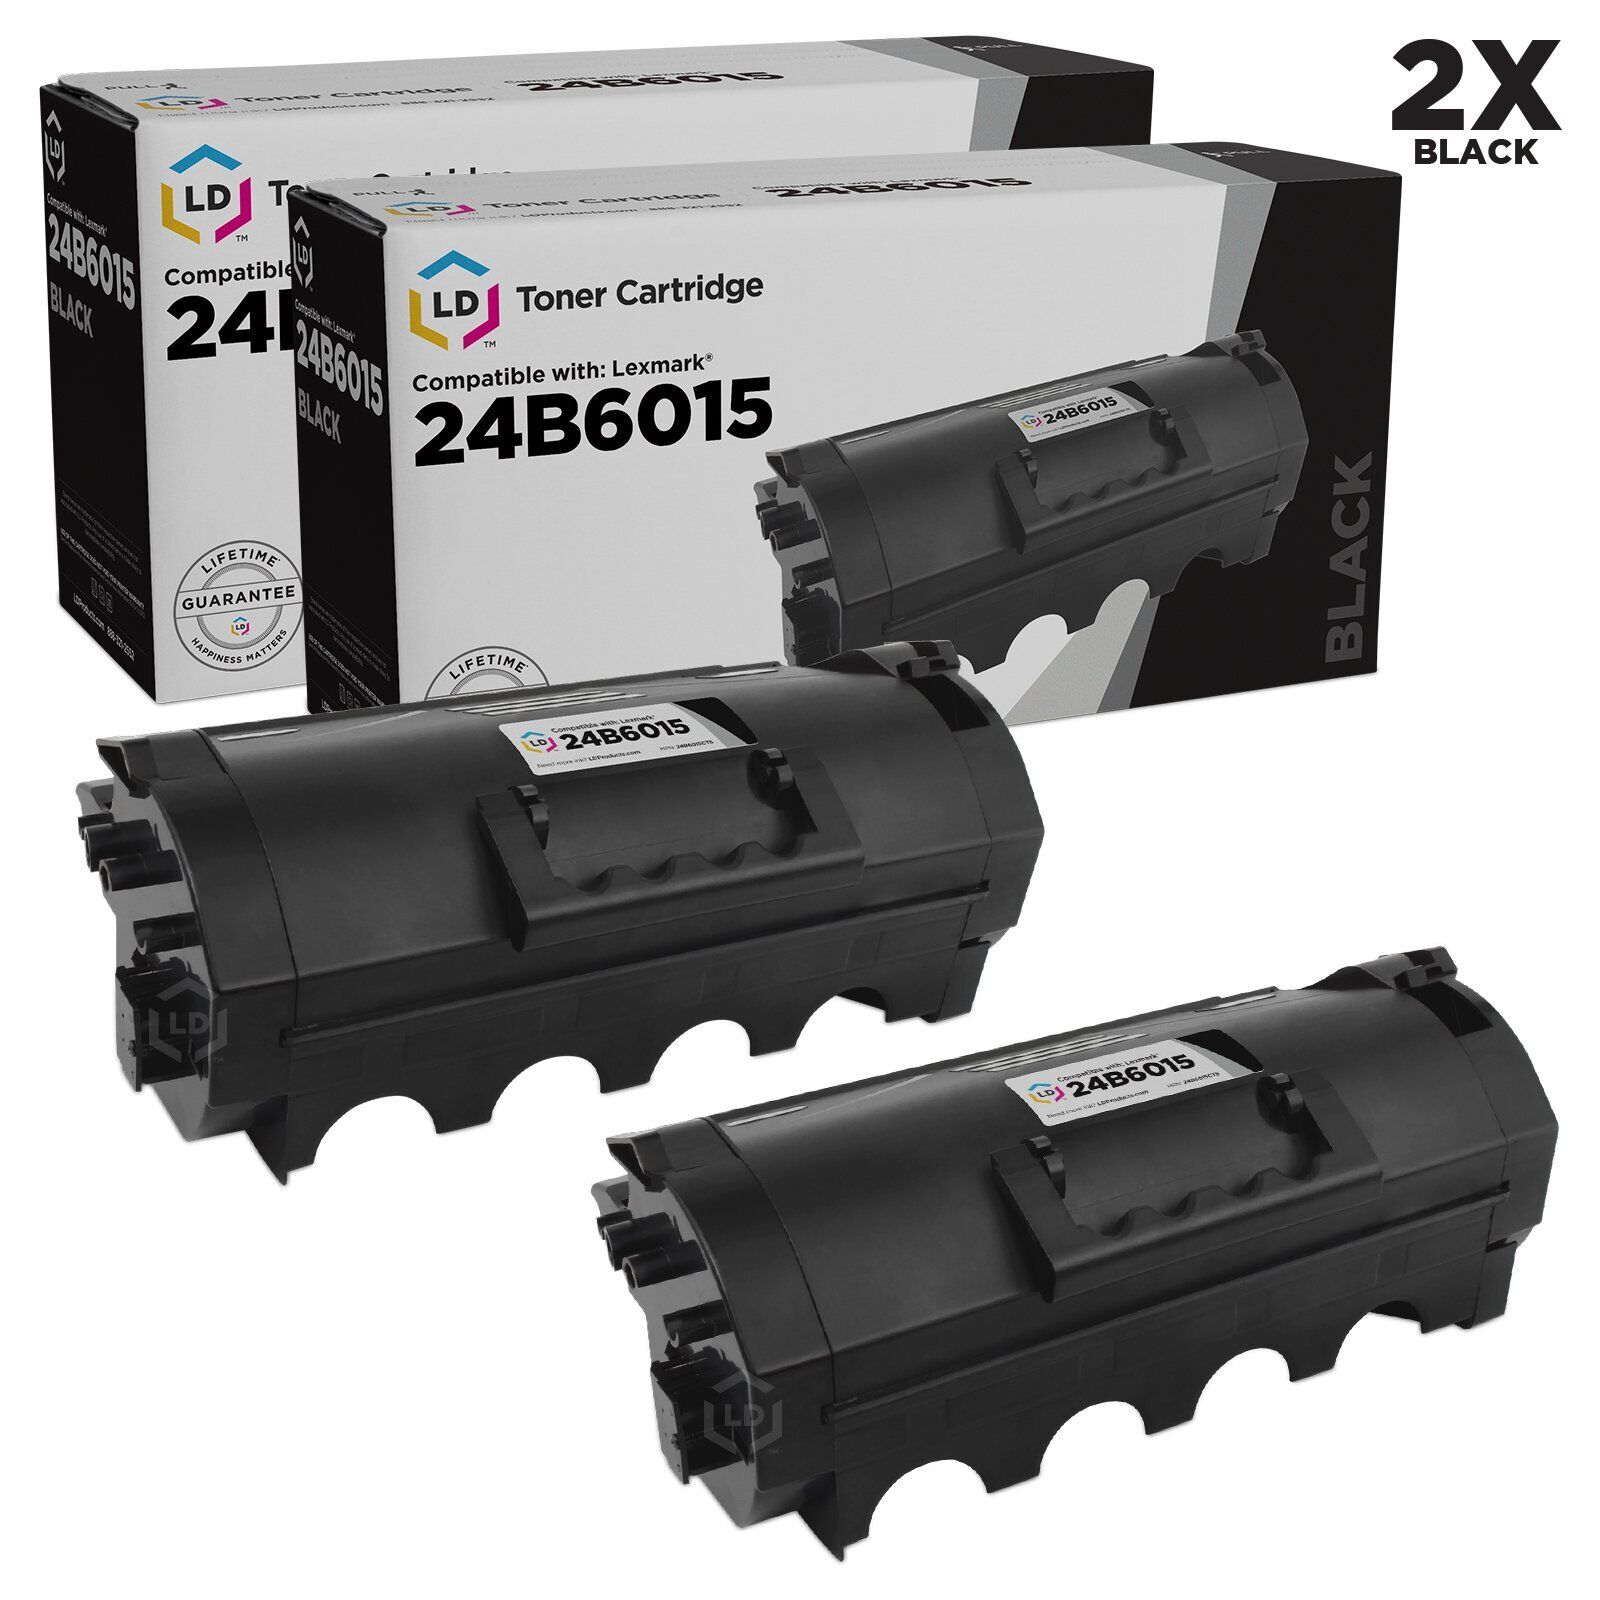 LD Compatible Lexmark 24B6015 Black Toner 2-Pack for M5155, M5163, M5170, XM5163